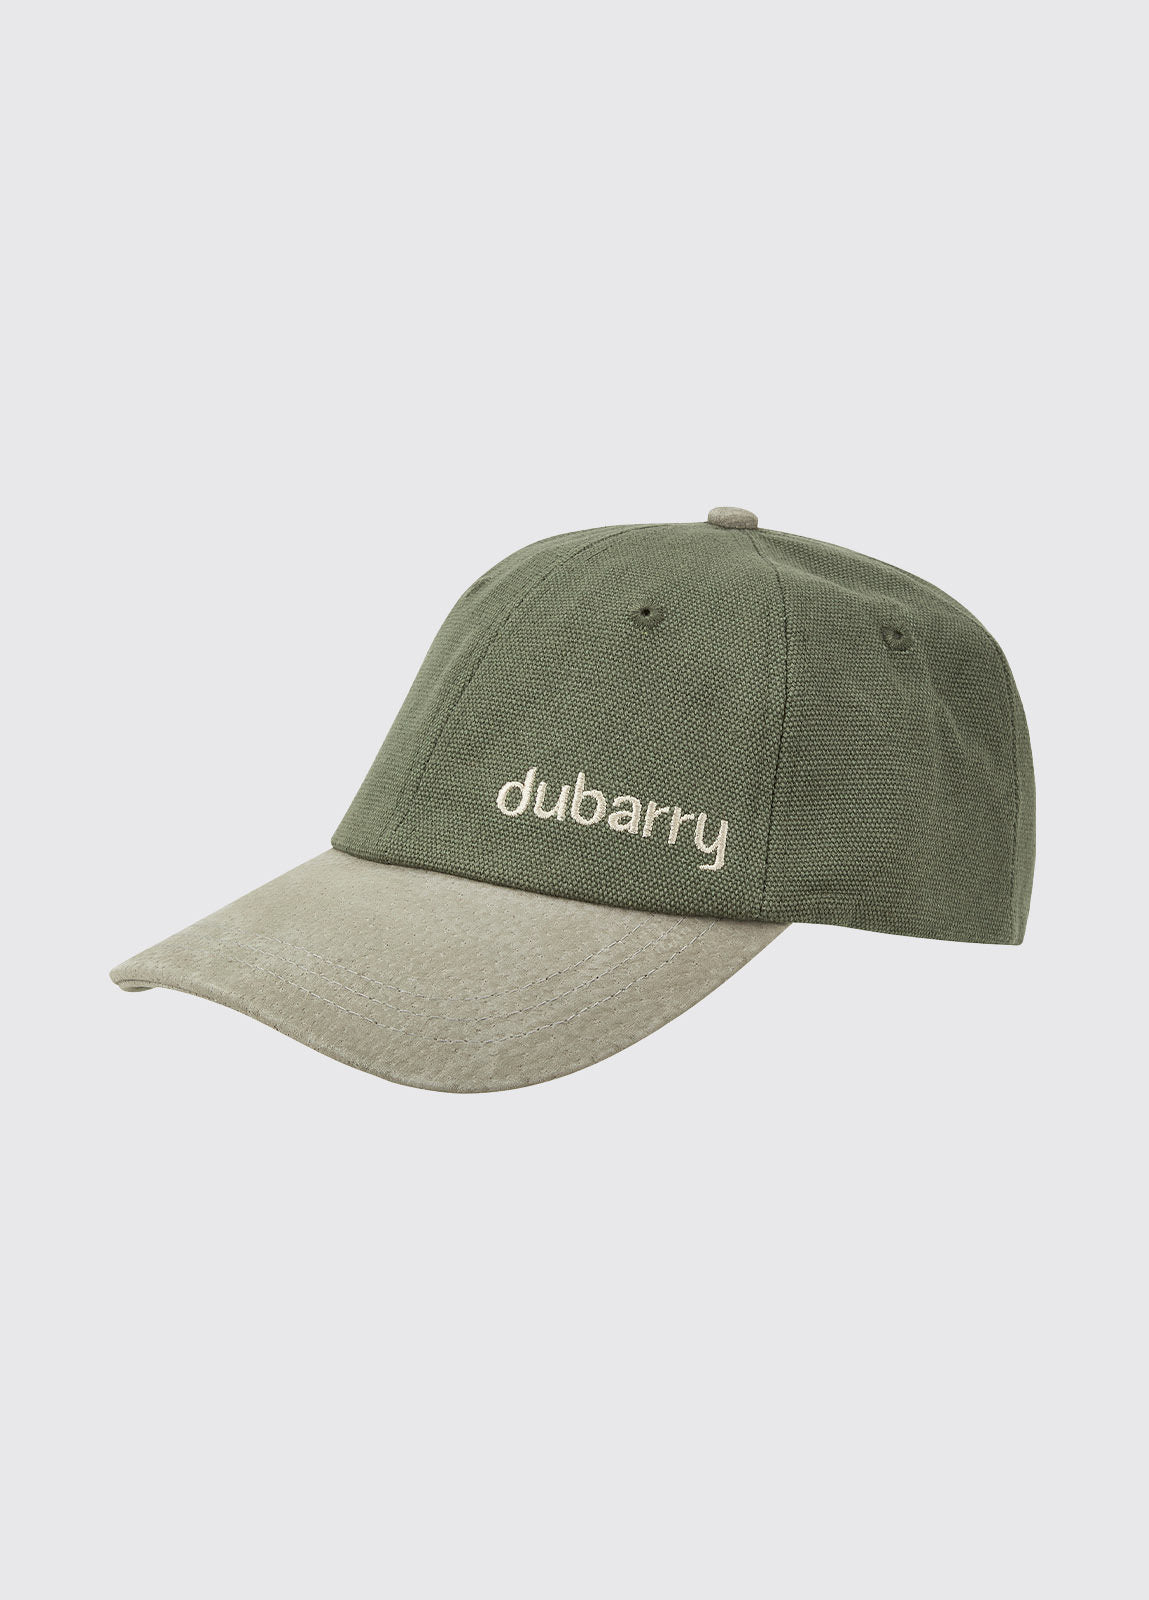 Dubarry Causeway Hat